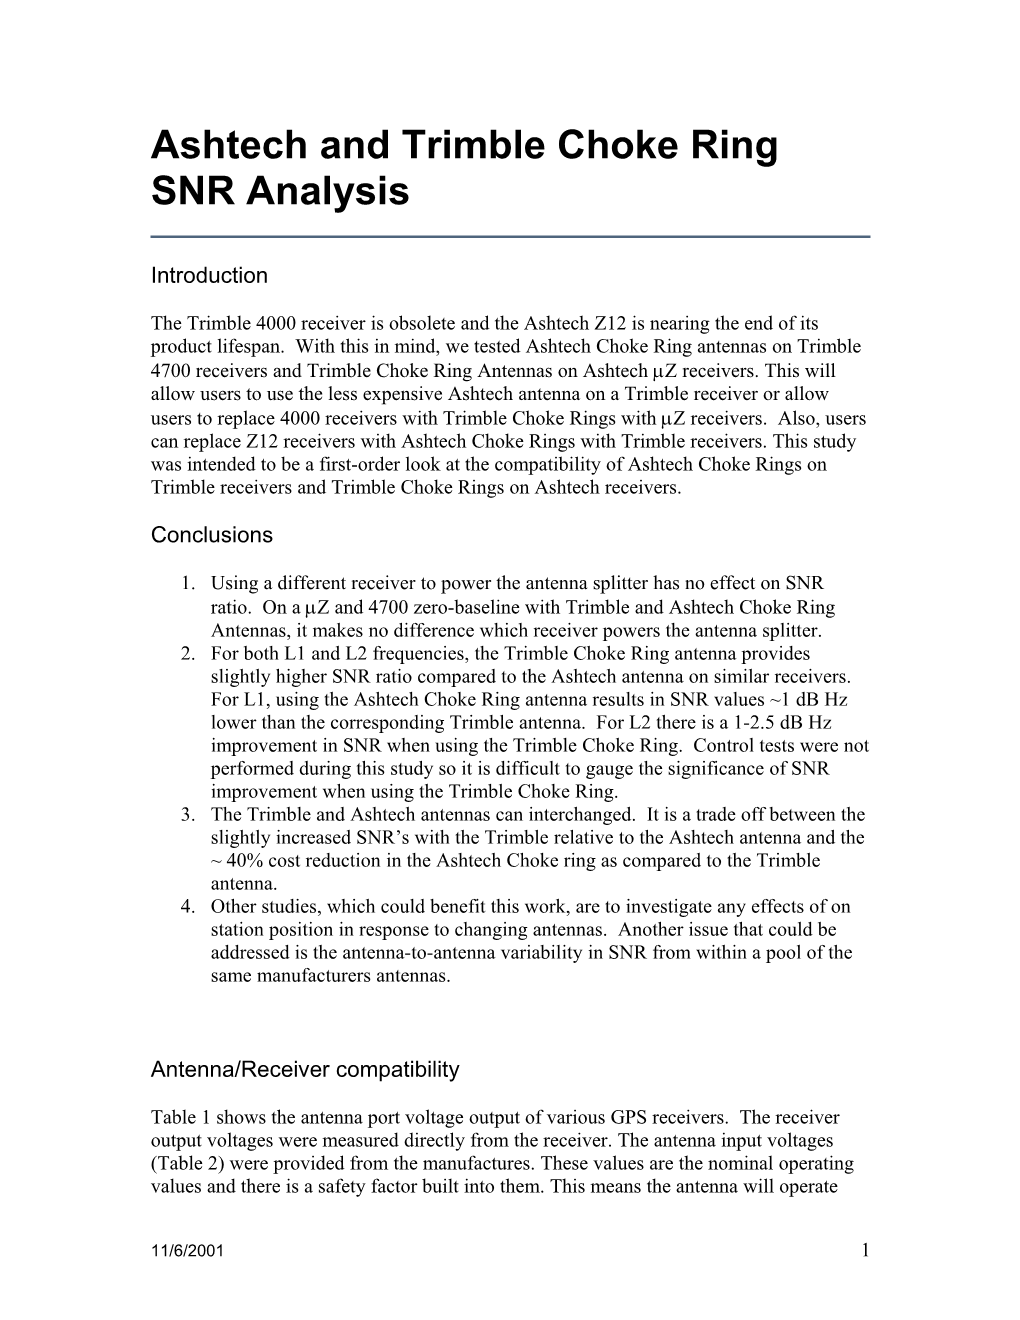 Ashtech and Trimble Choke Ring SNR Analysis